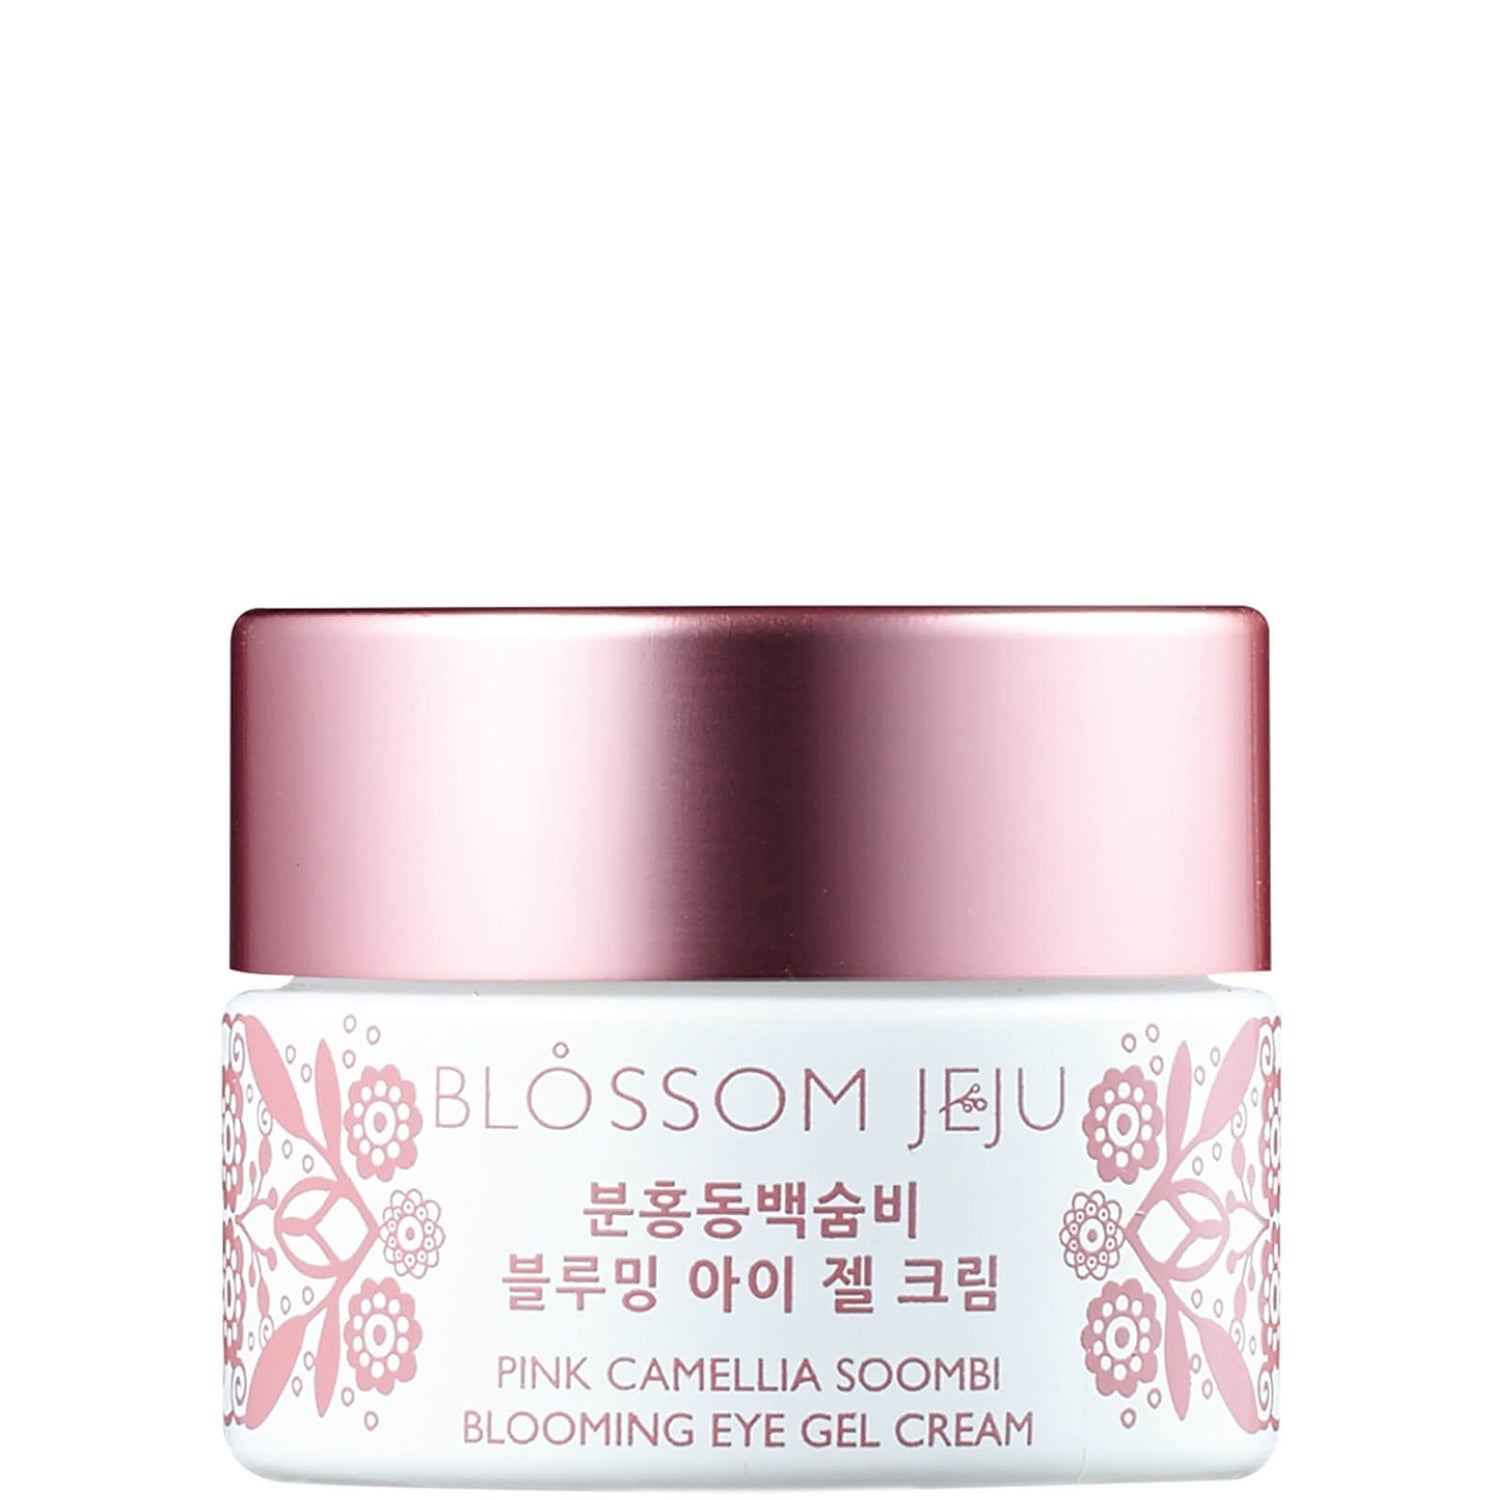 Blossom Jeju Pink Camellia Soombi Blooming Eye Gel Cream